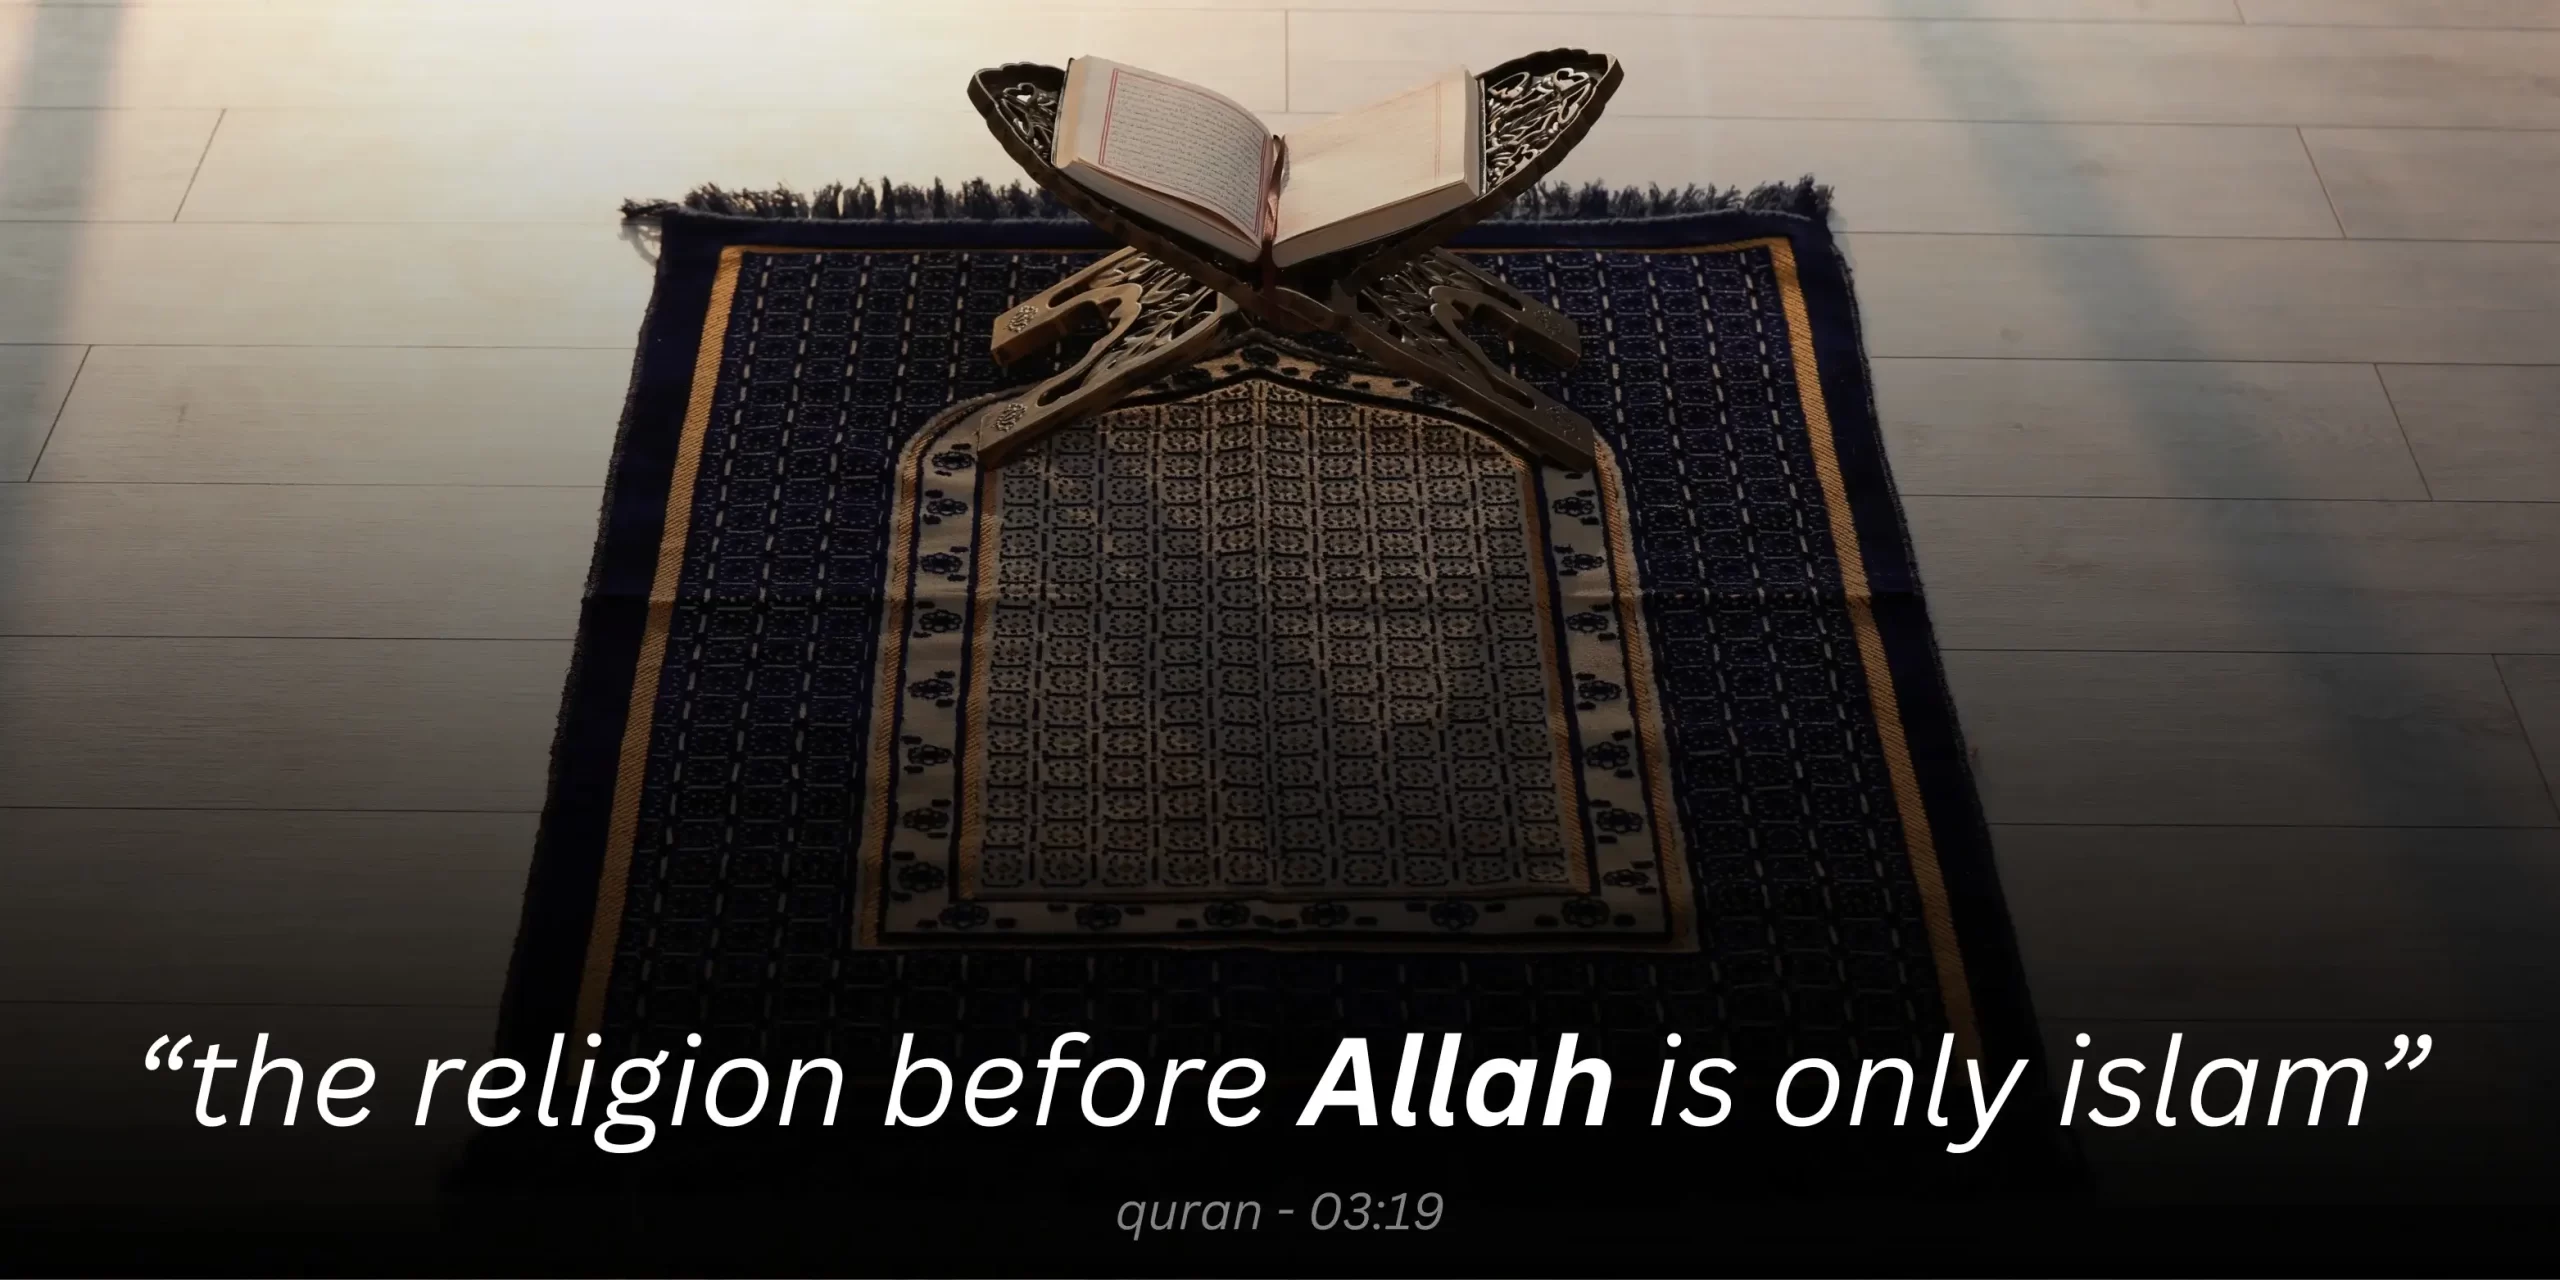 Quran on prayer mat